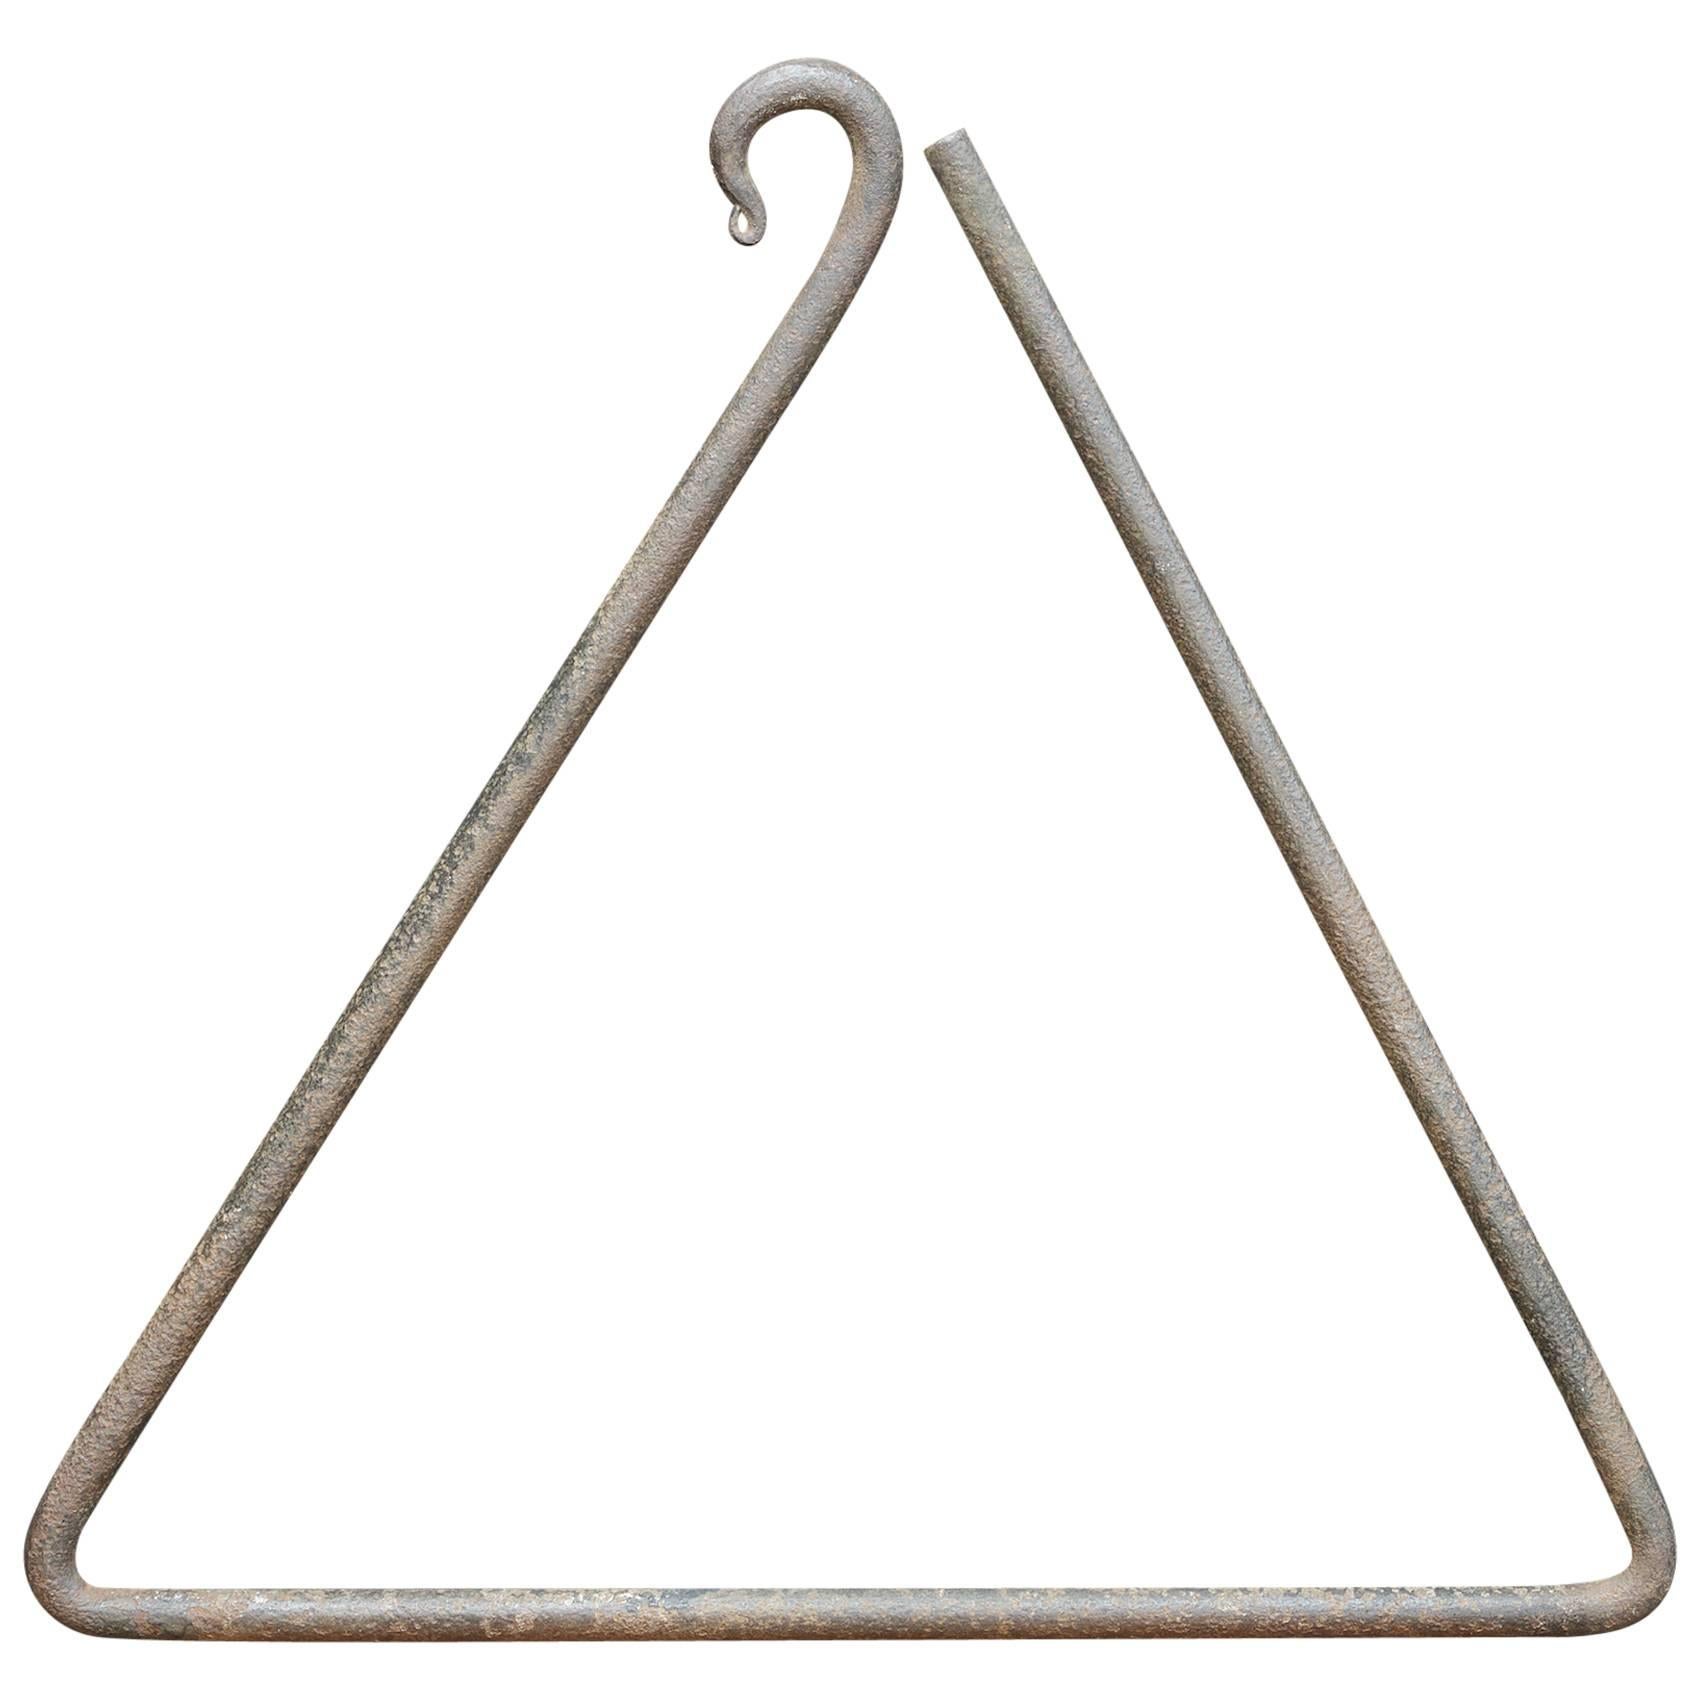 1950s American Studio Craft Iron Triangle Dinner Bell 